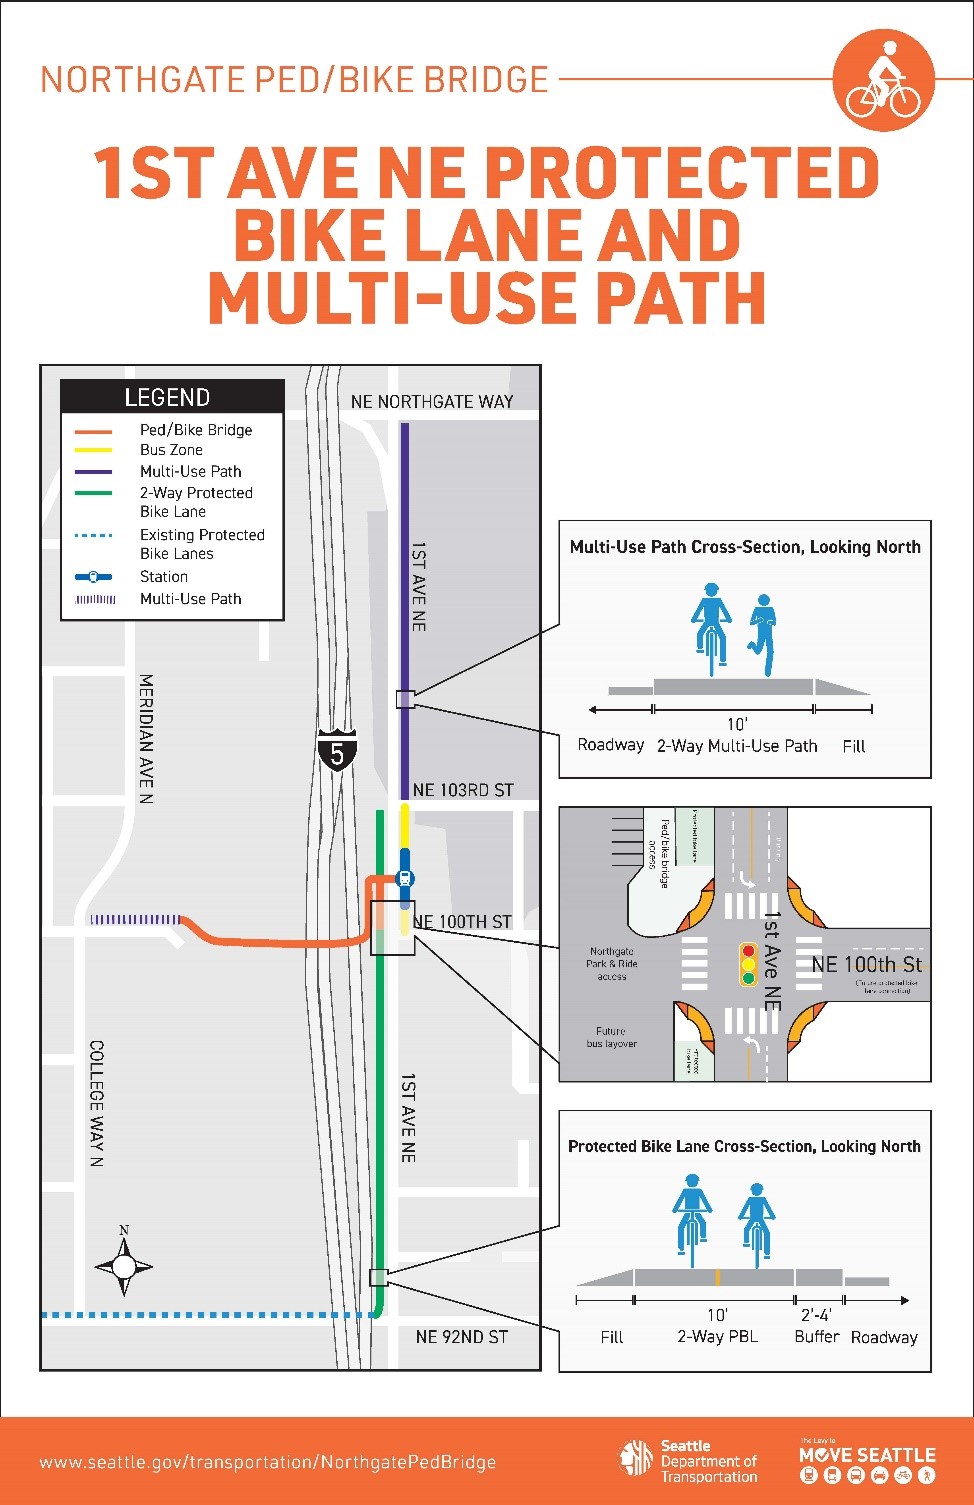 1st ave ne protected bike lane and multi-use path